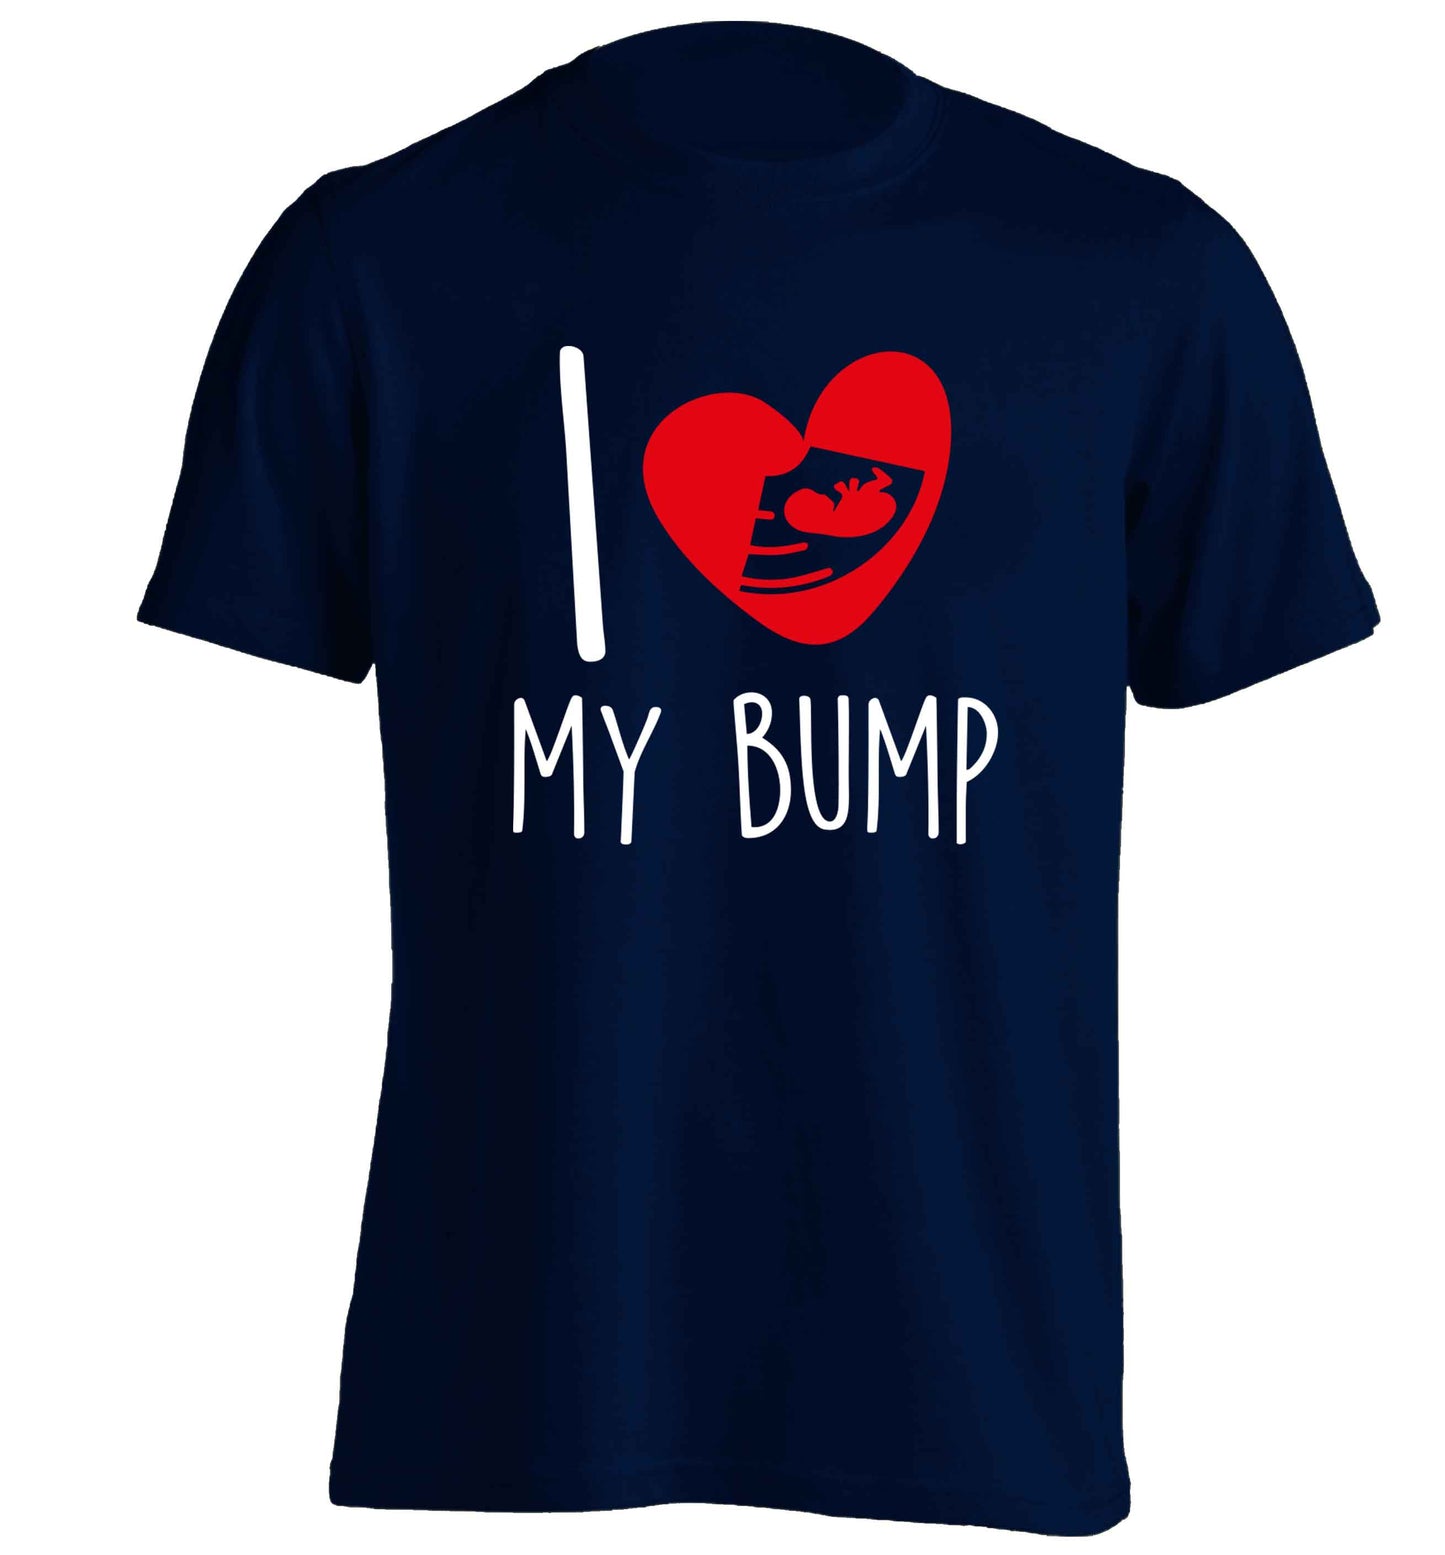 I love my bump adults unisex navy Tshirt 2XL